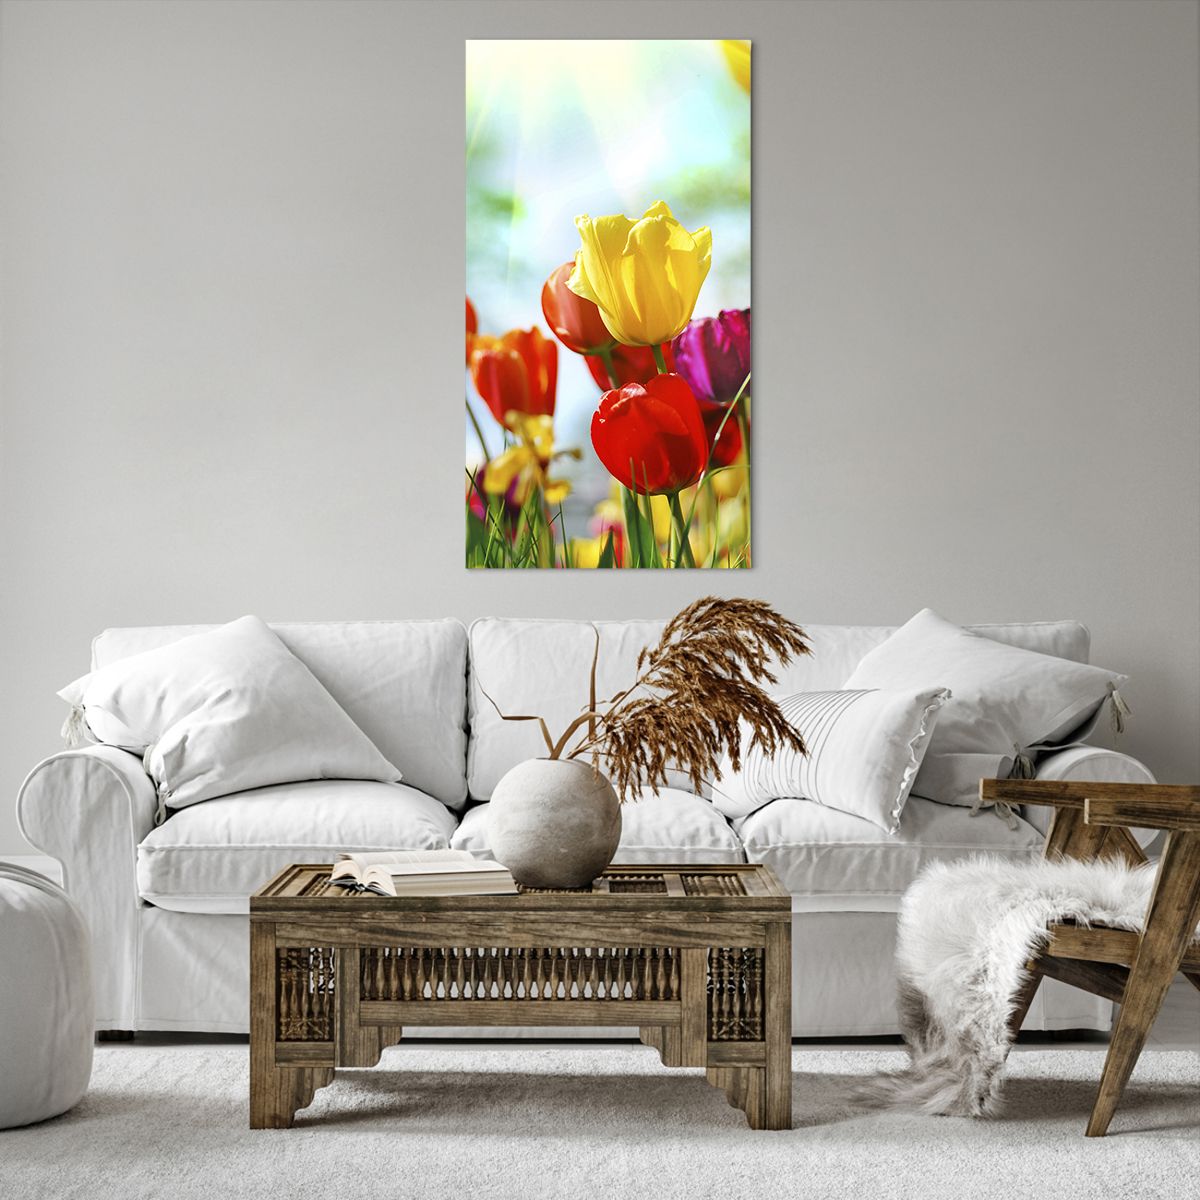 Bild auf Leinwand Tulpen, Bild auf Leinwand Blumen, Bild auf Leinwand Wiese, Bild auf Leinwand Natur, Bild auf Leinwand Farbenfrohe Blumen